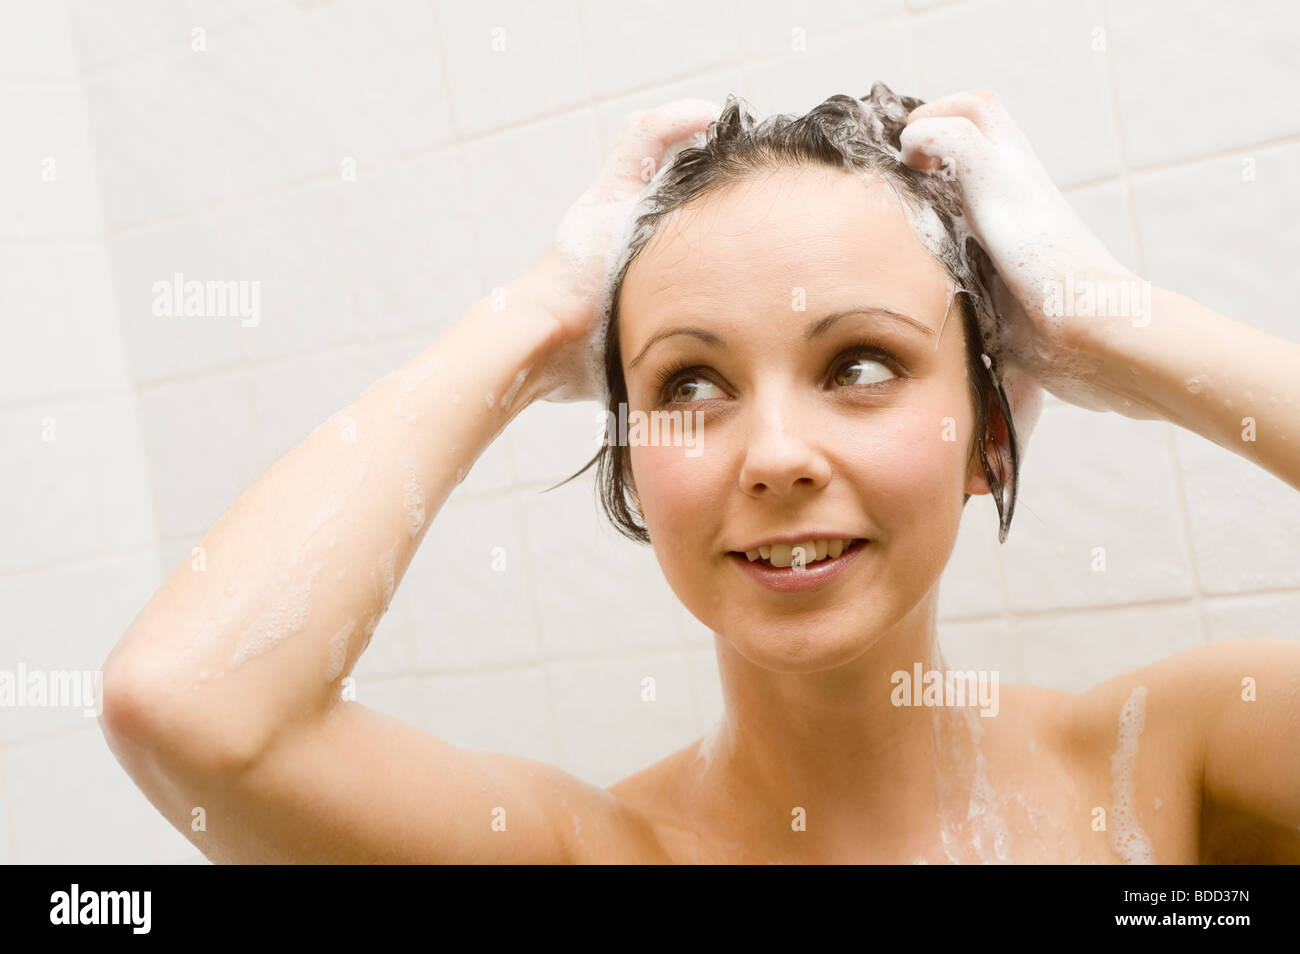 Teen taking shower